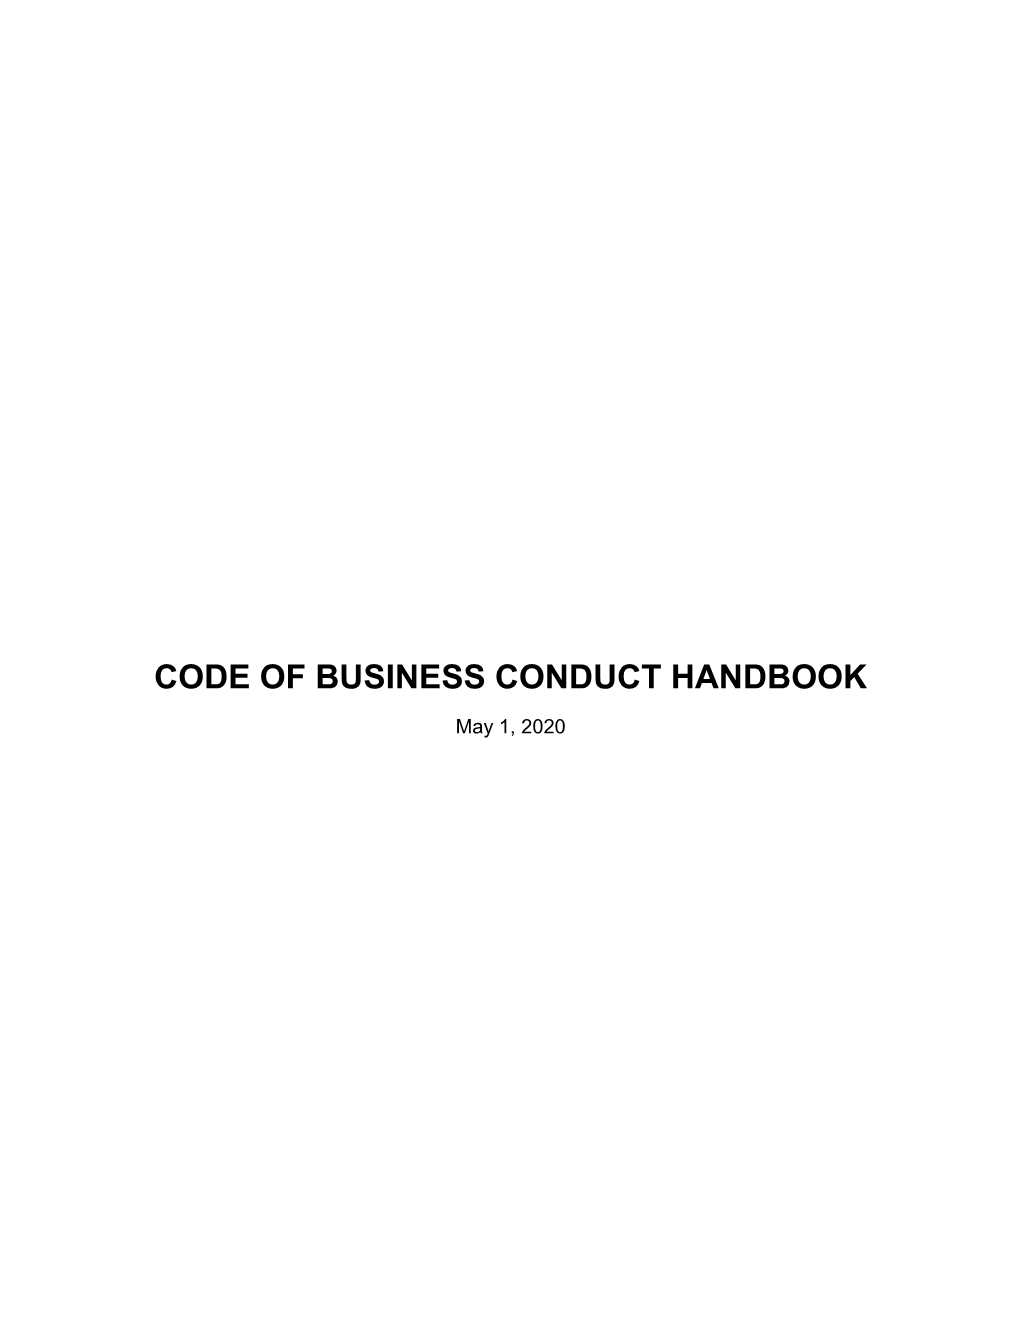 Code of Business Conduct Handbook